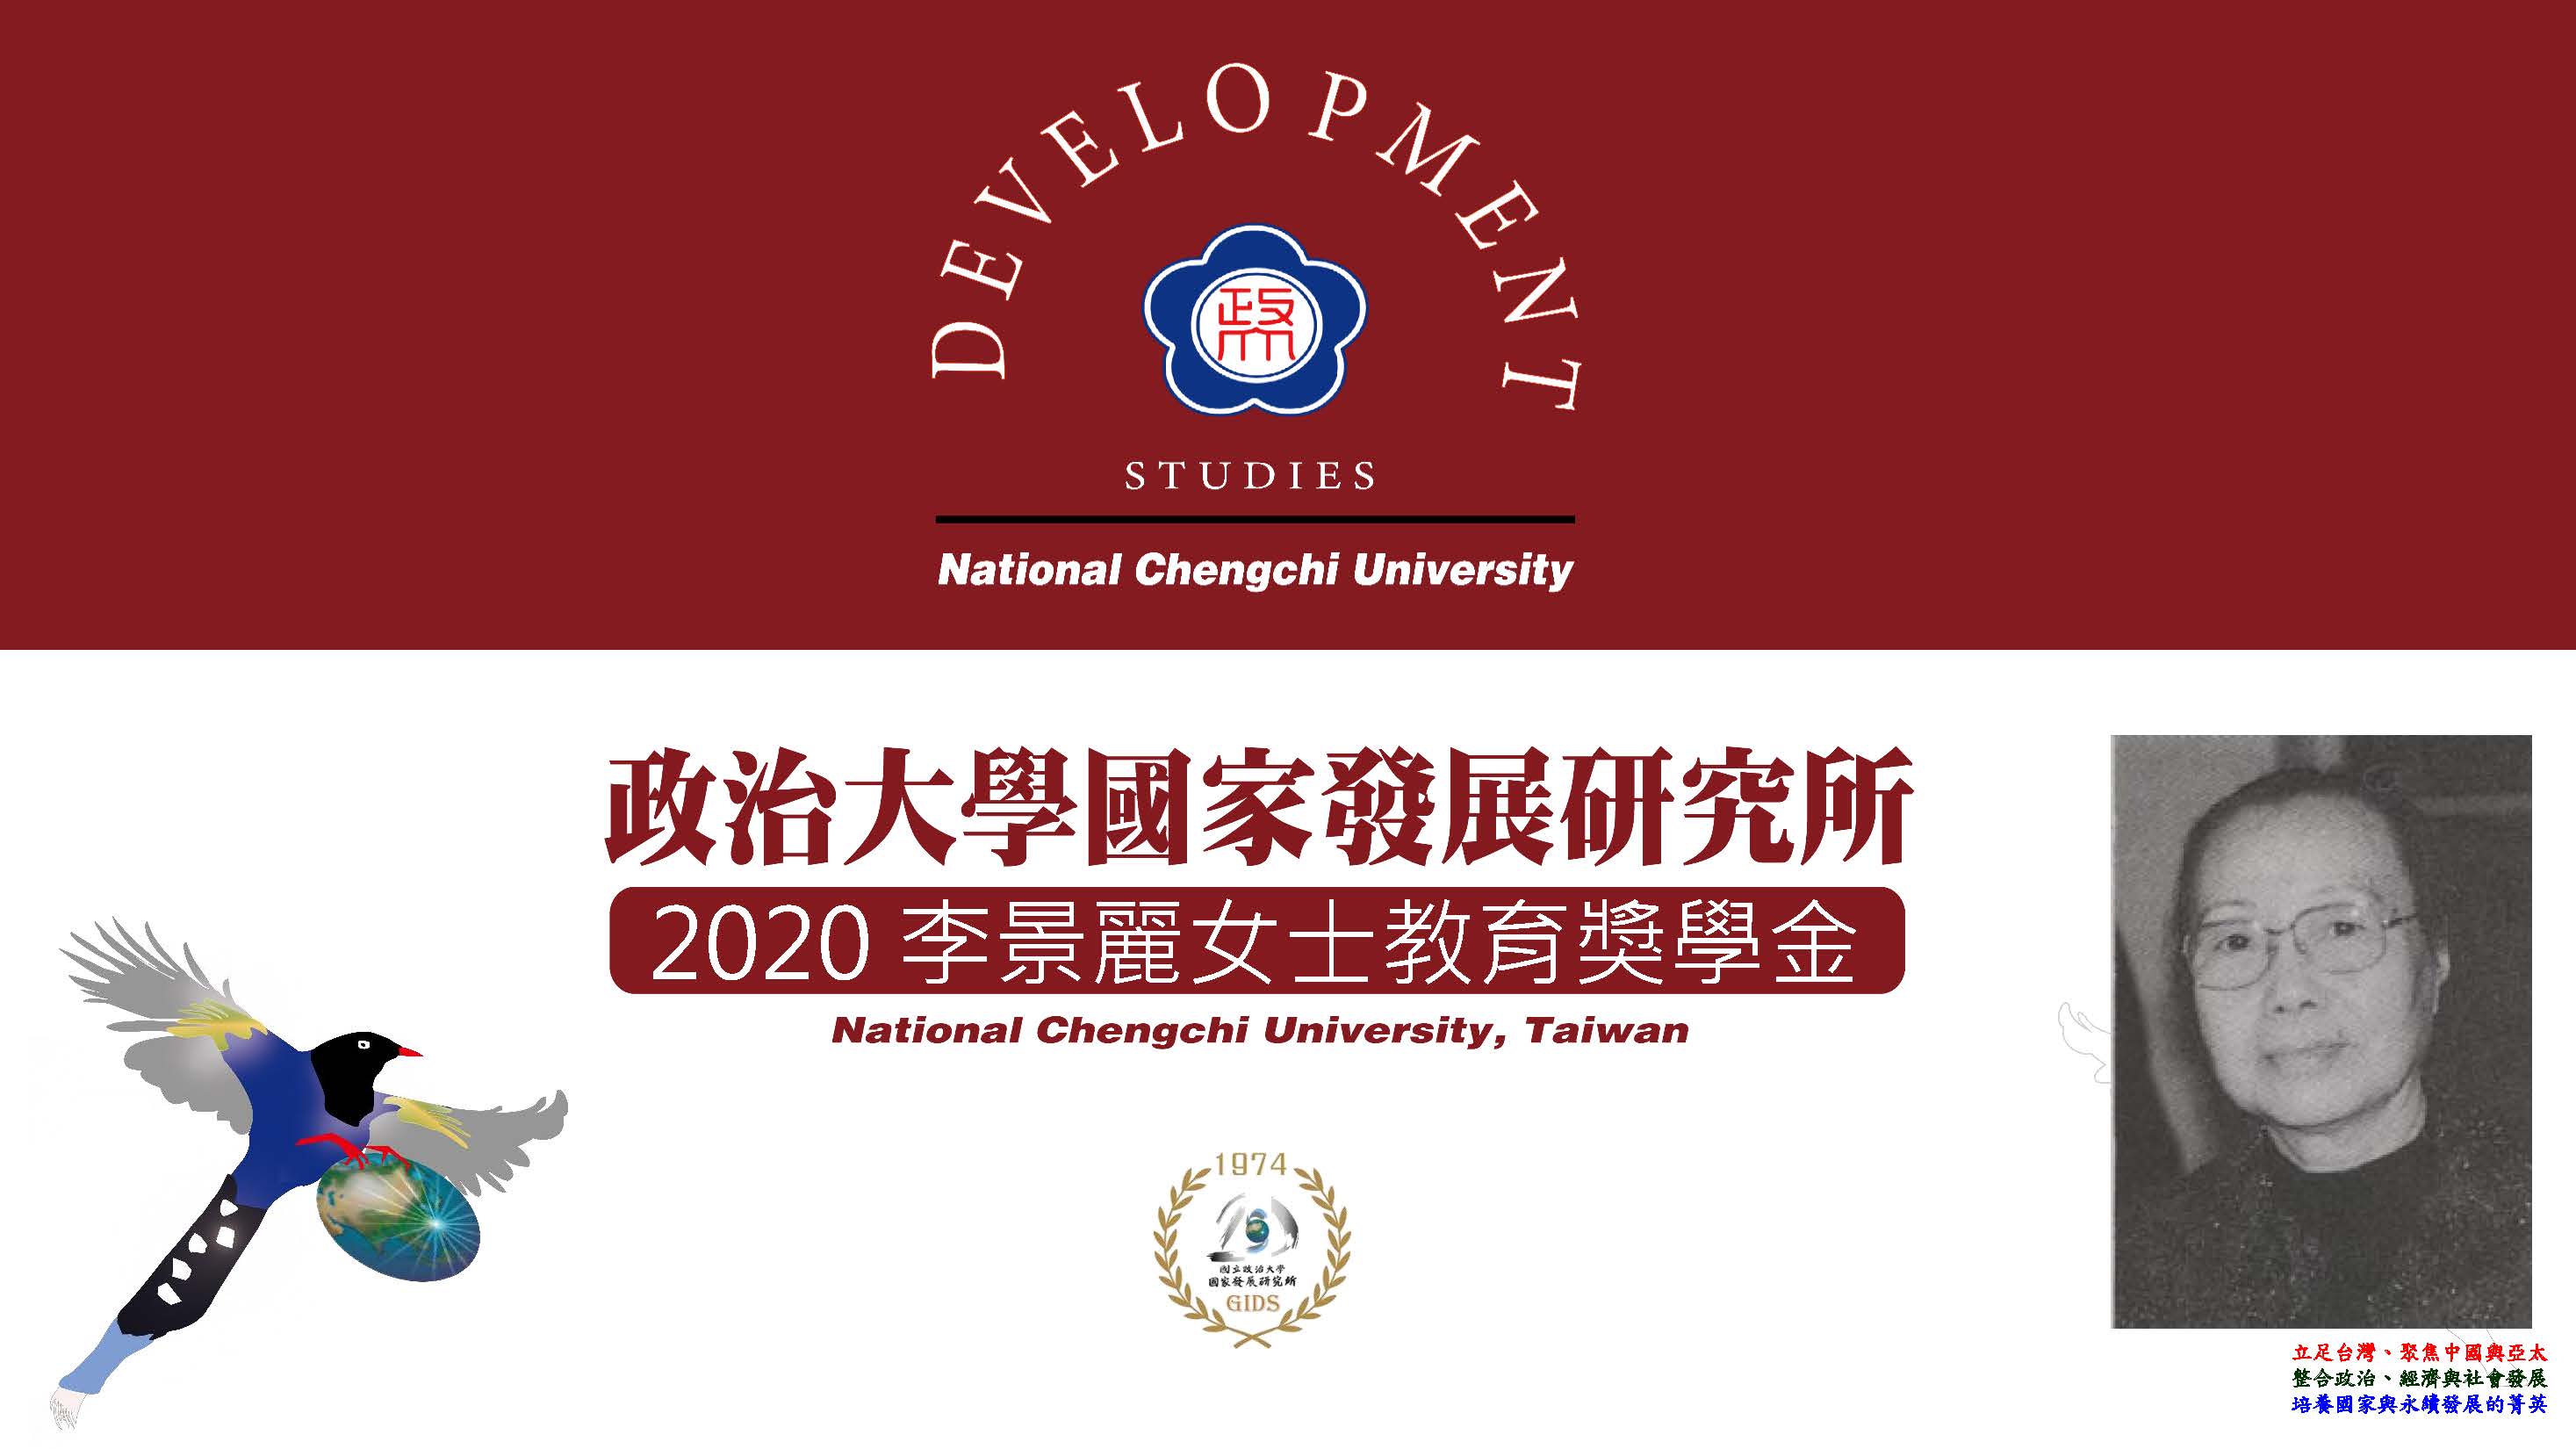 2020 Awardee of Ms. Li Jingli Education Scholarship